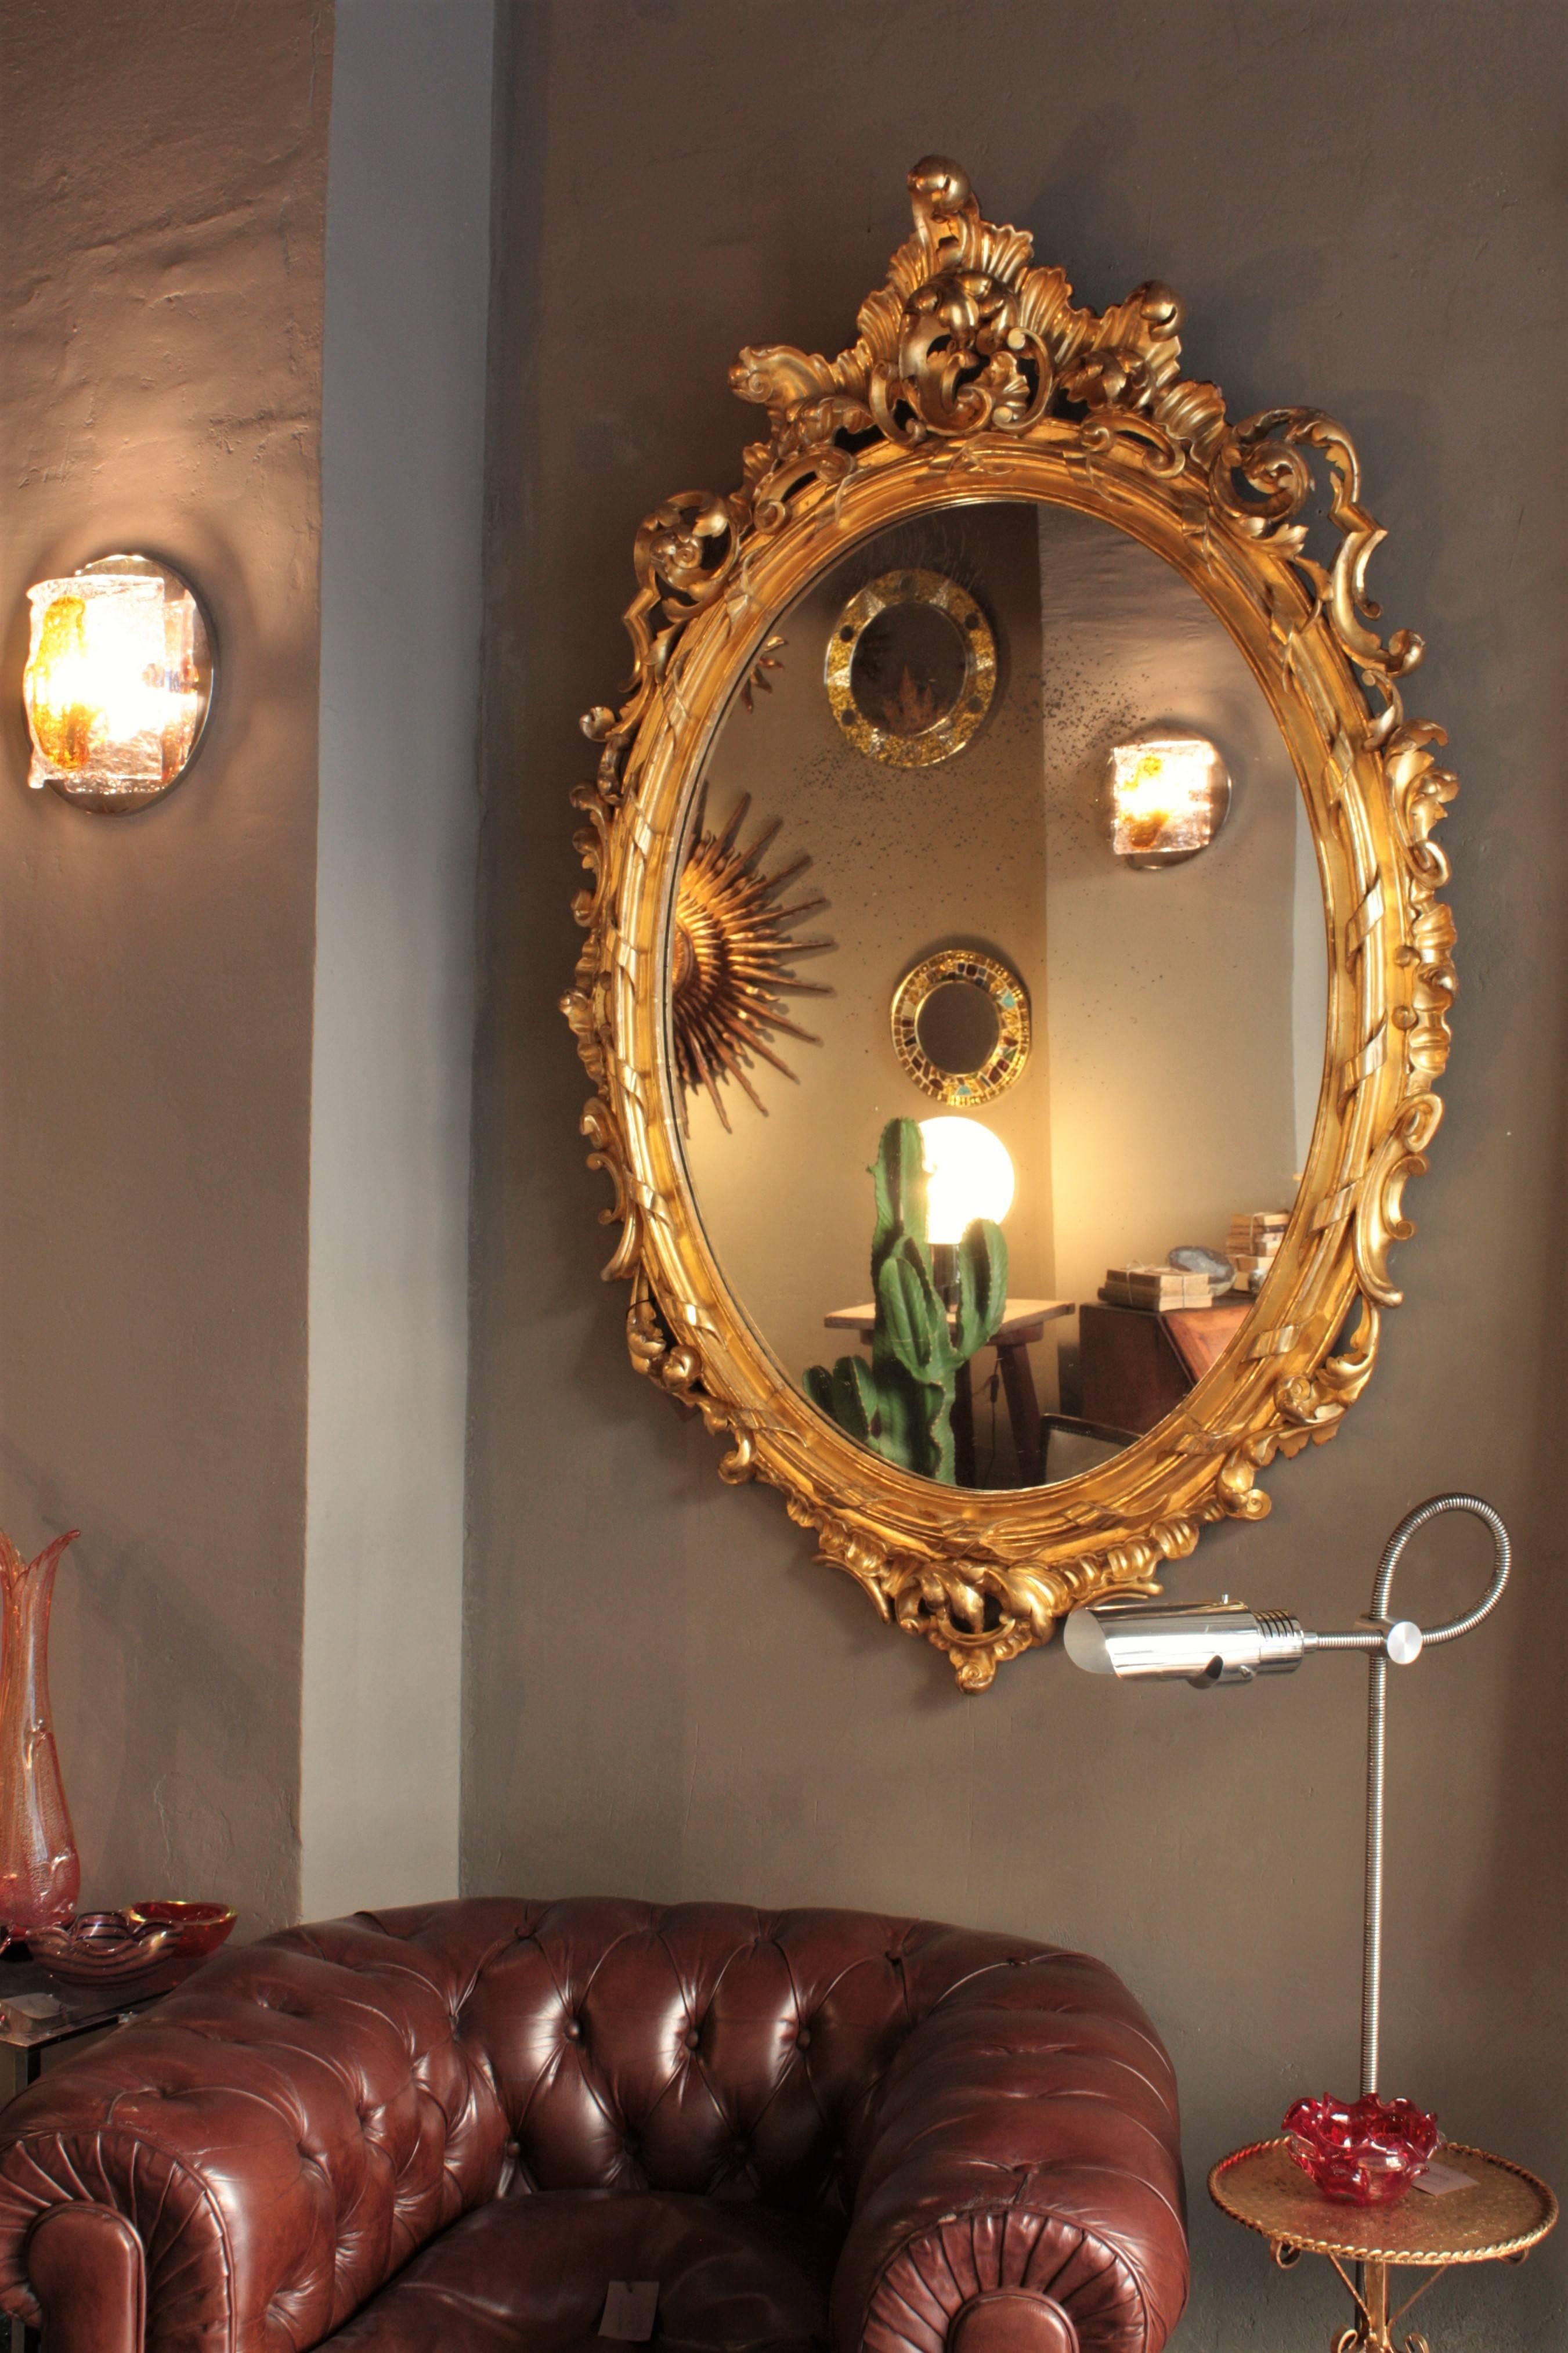 Rococo Miroir ovale palatial en bois doré sculpté de style rococo français en vente